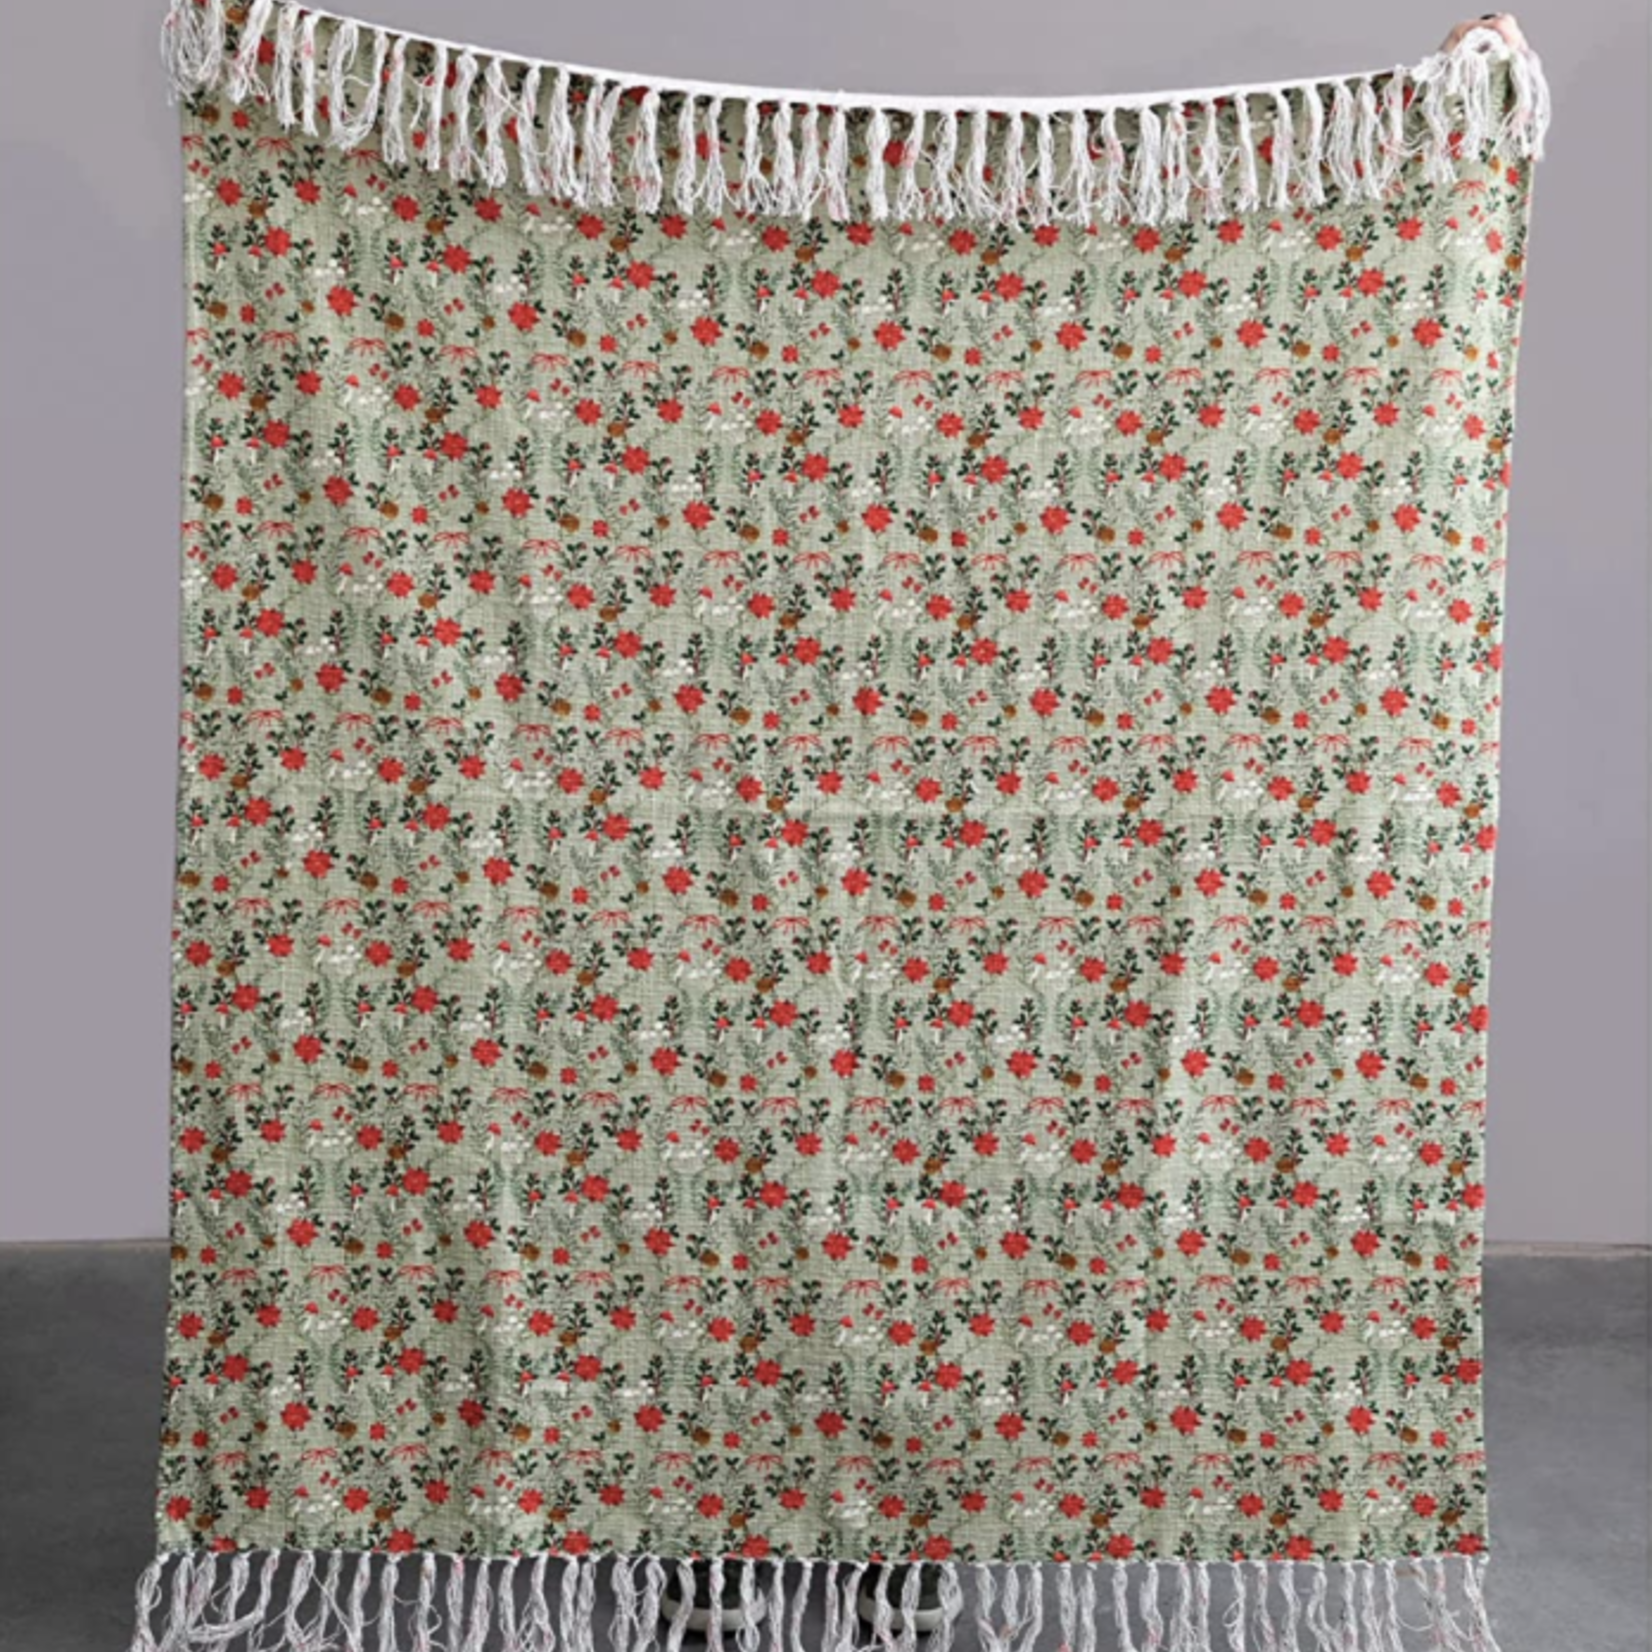 Cotton Printed Slub Throw with Floral Pattern